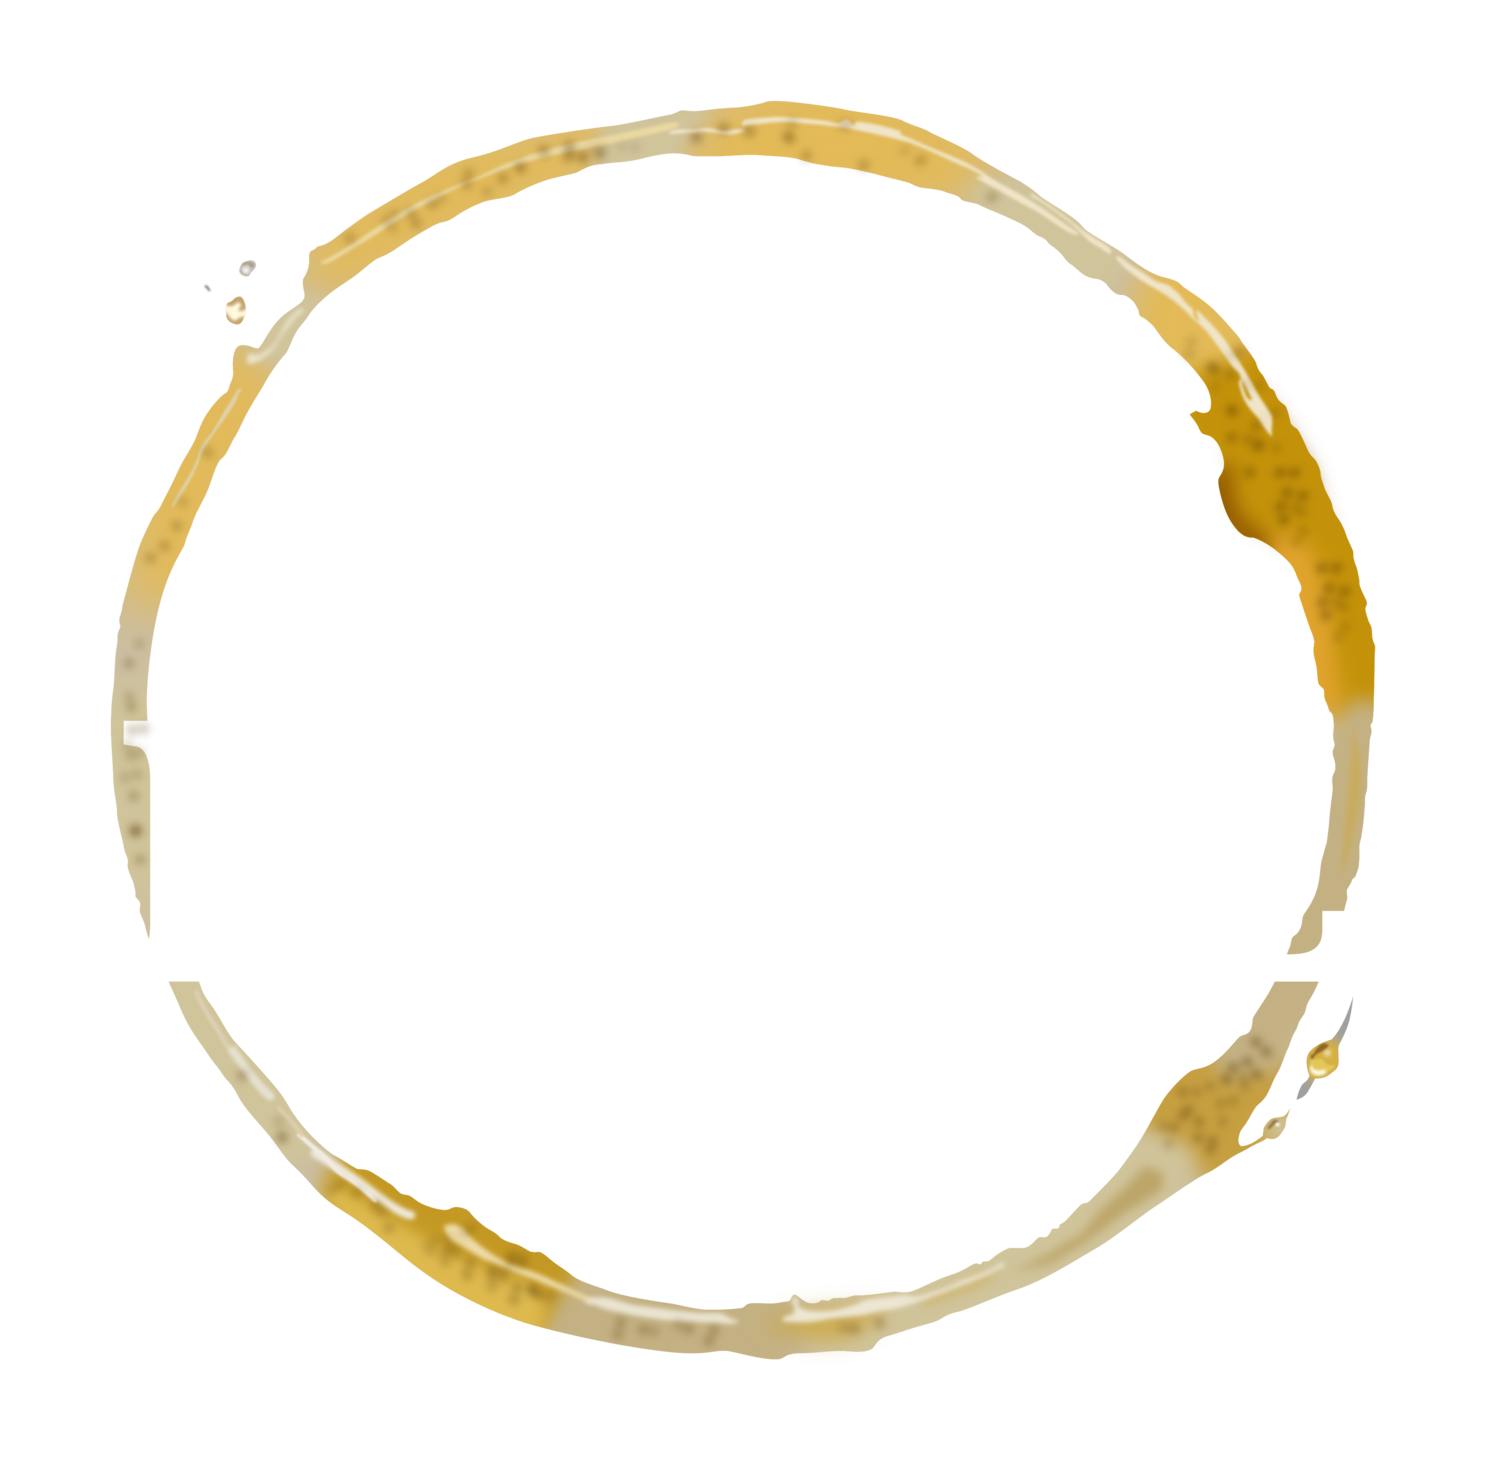 Sweet Bee's Honey Festival & Country Fair